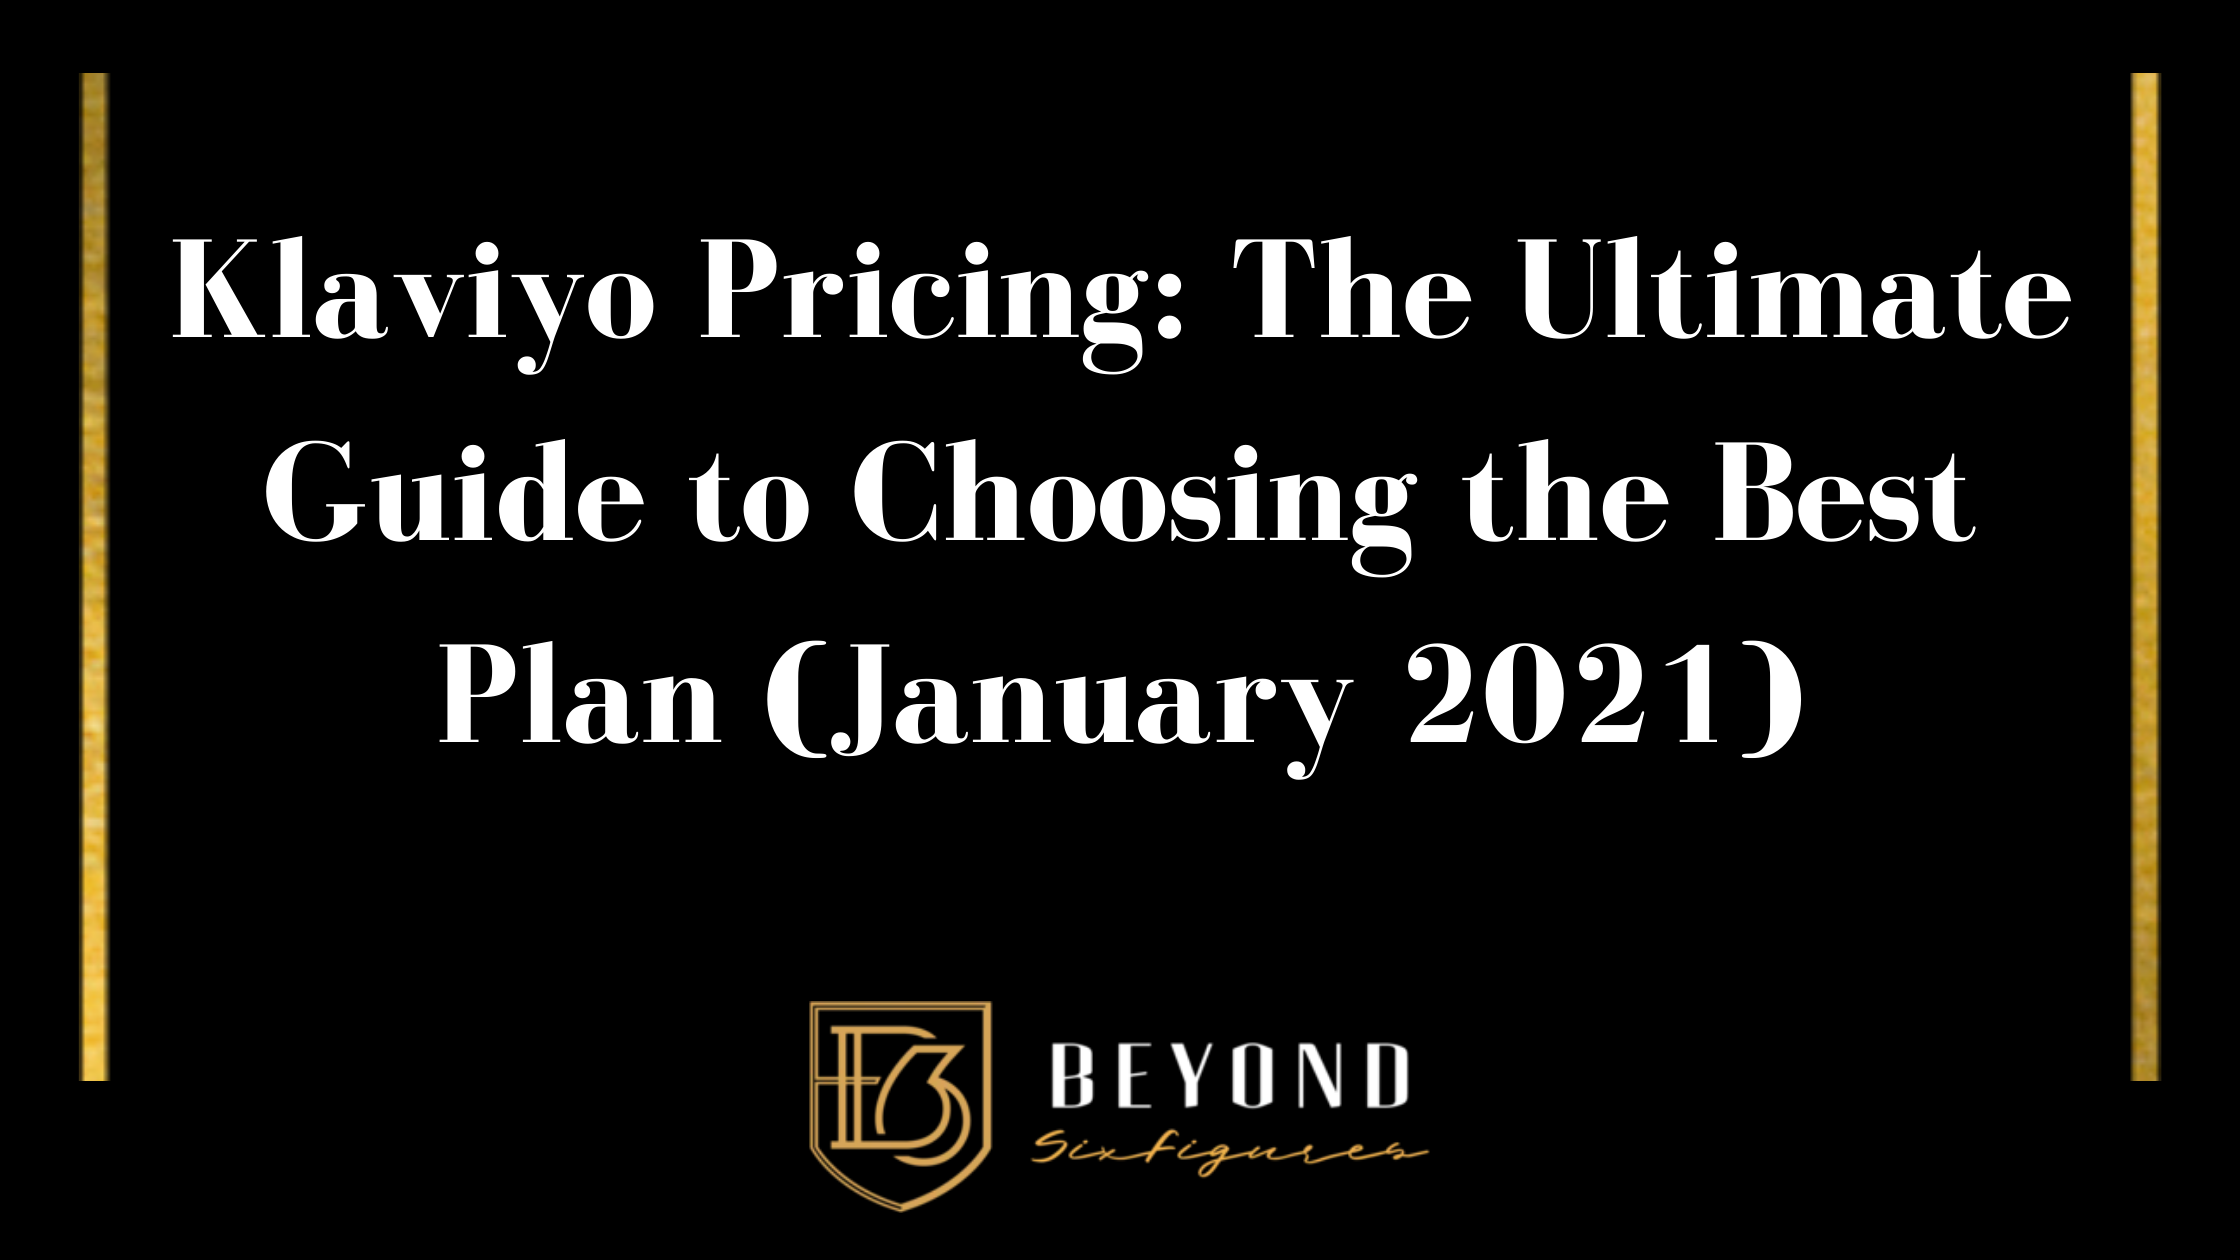 Klaviyo Pricing: The Ultimate Guide to Choosing the Best Plan (January 2021) blog banner